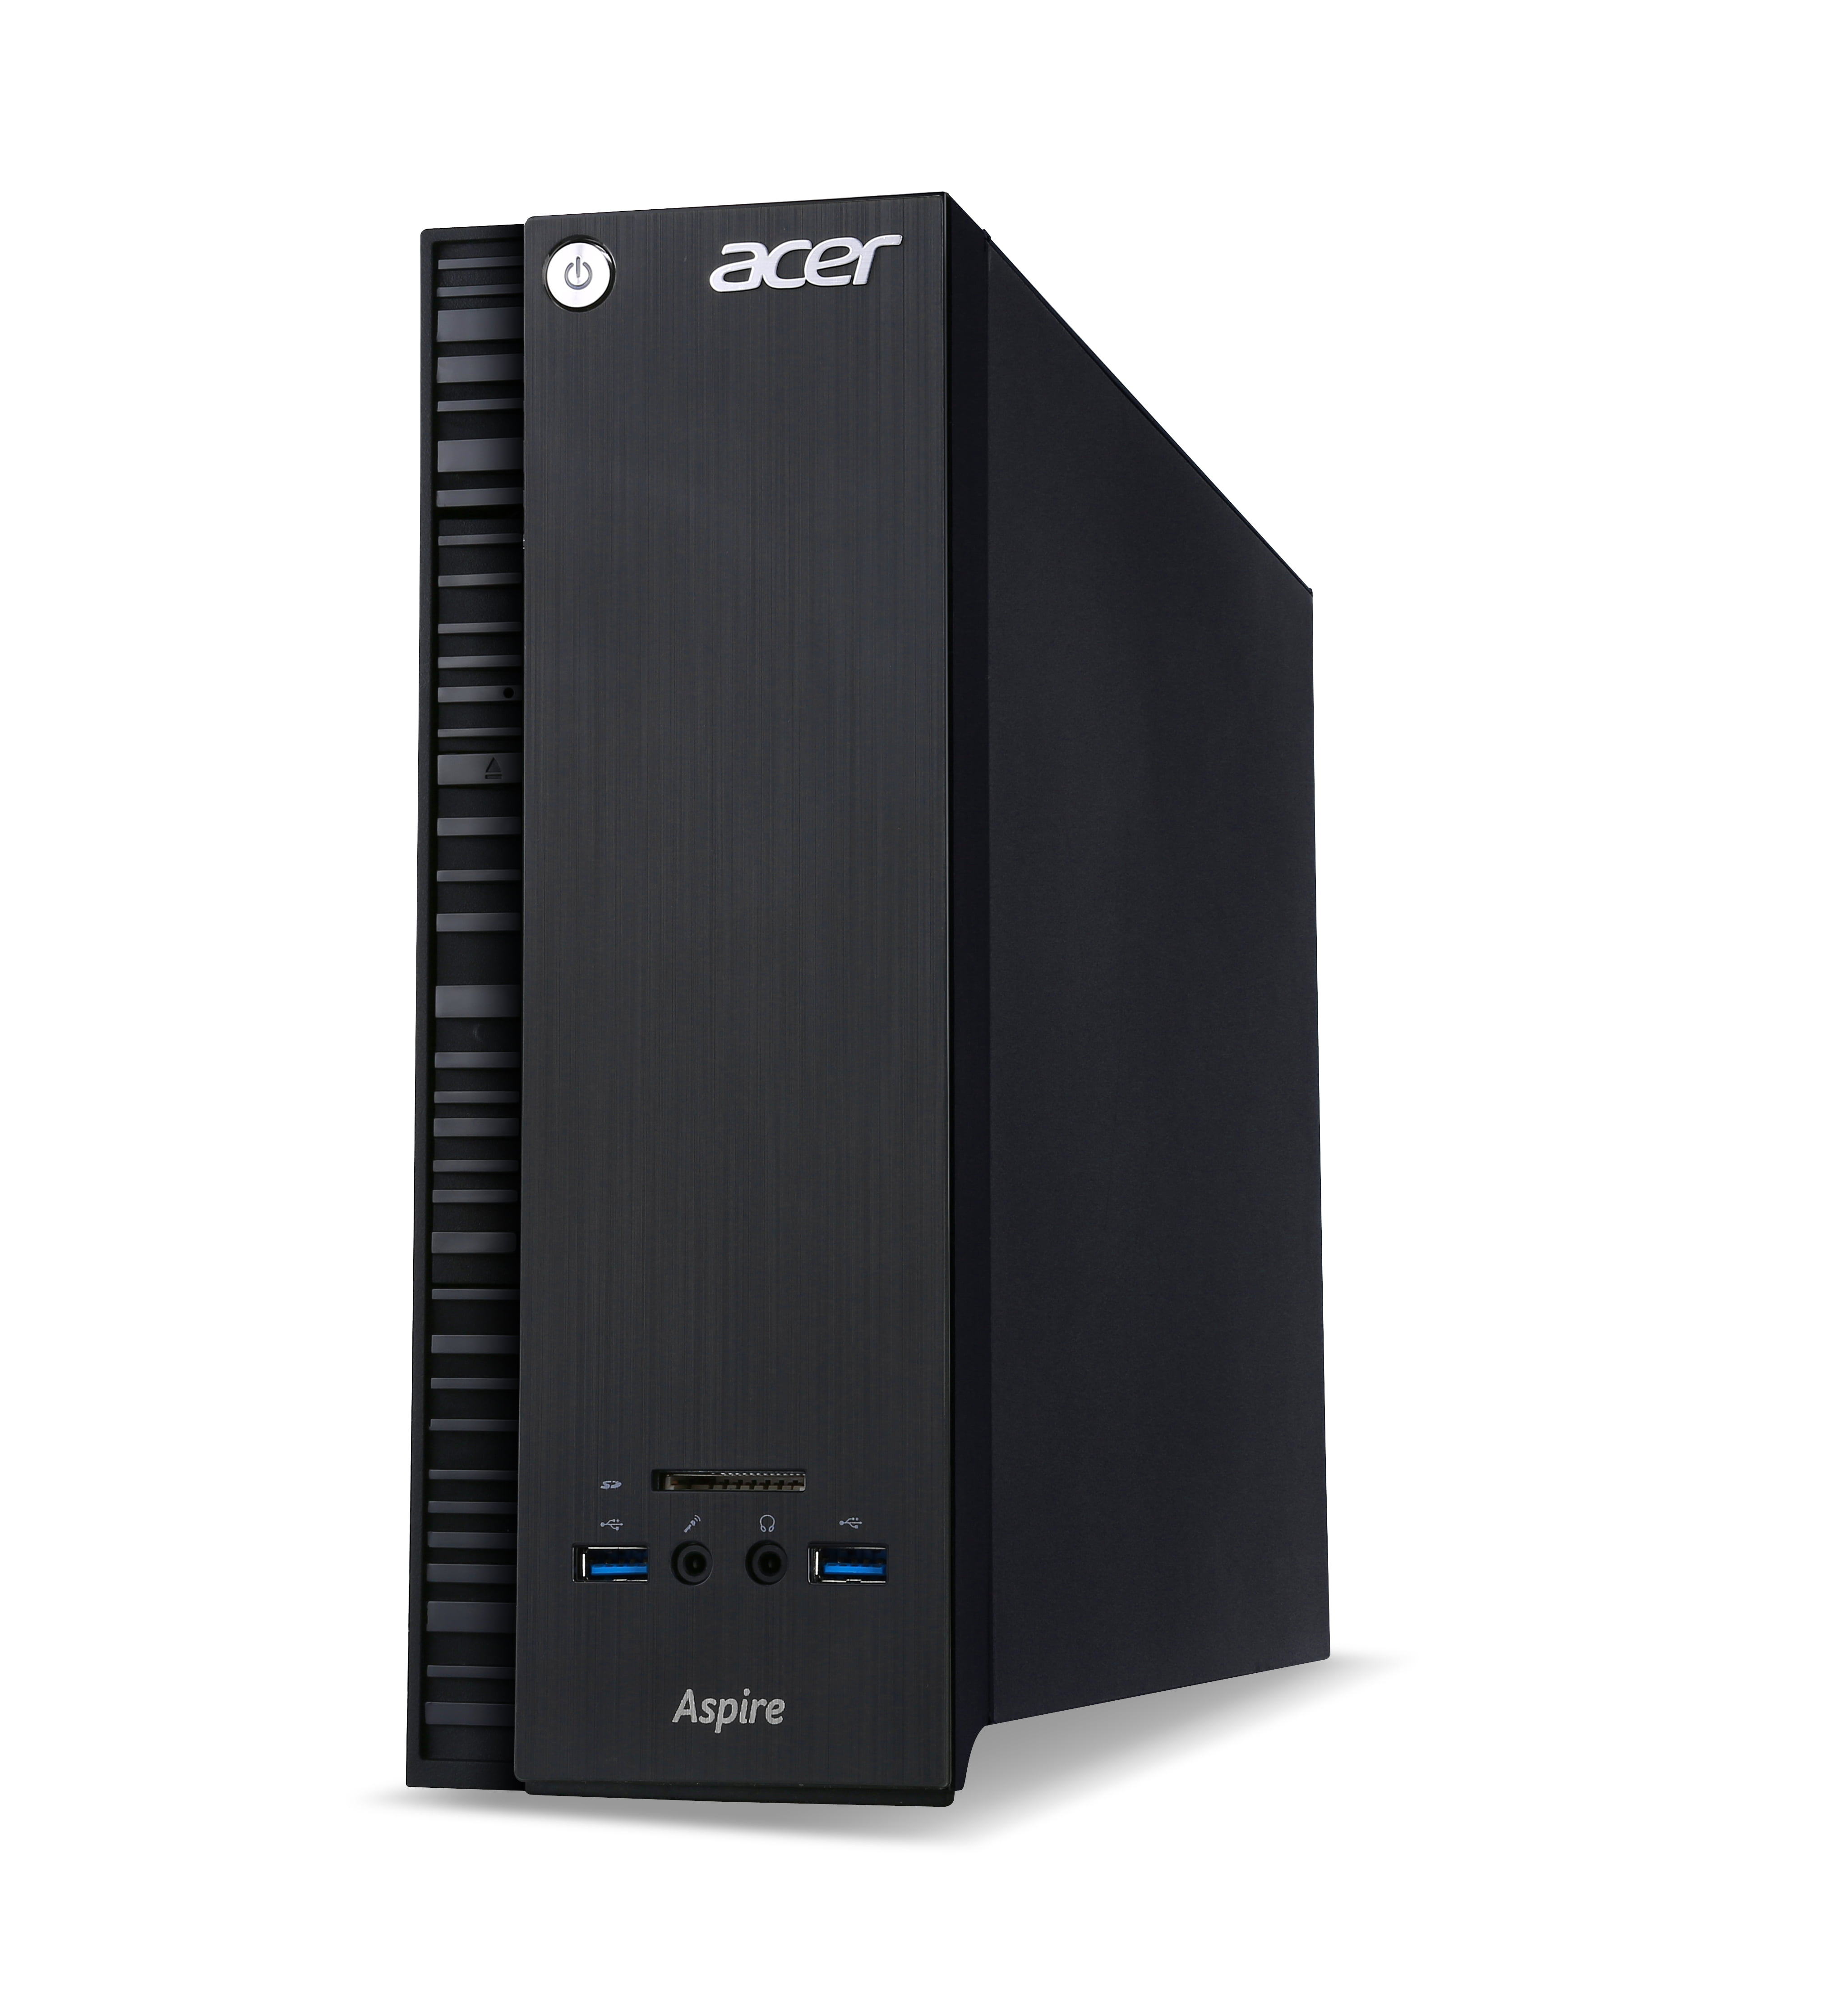 Acer Aspire XC-705 Desktop PC with Intel Core i3-4160 Dual-Core